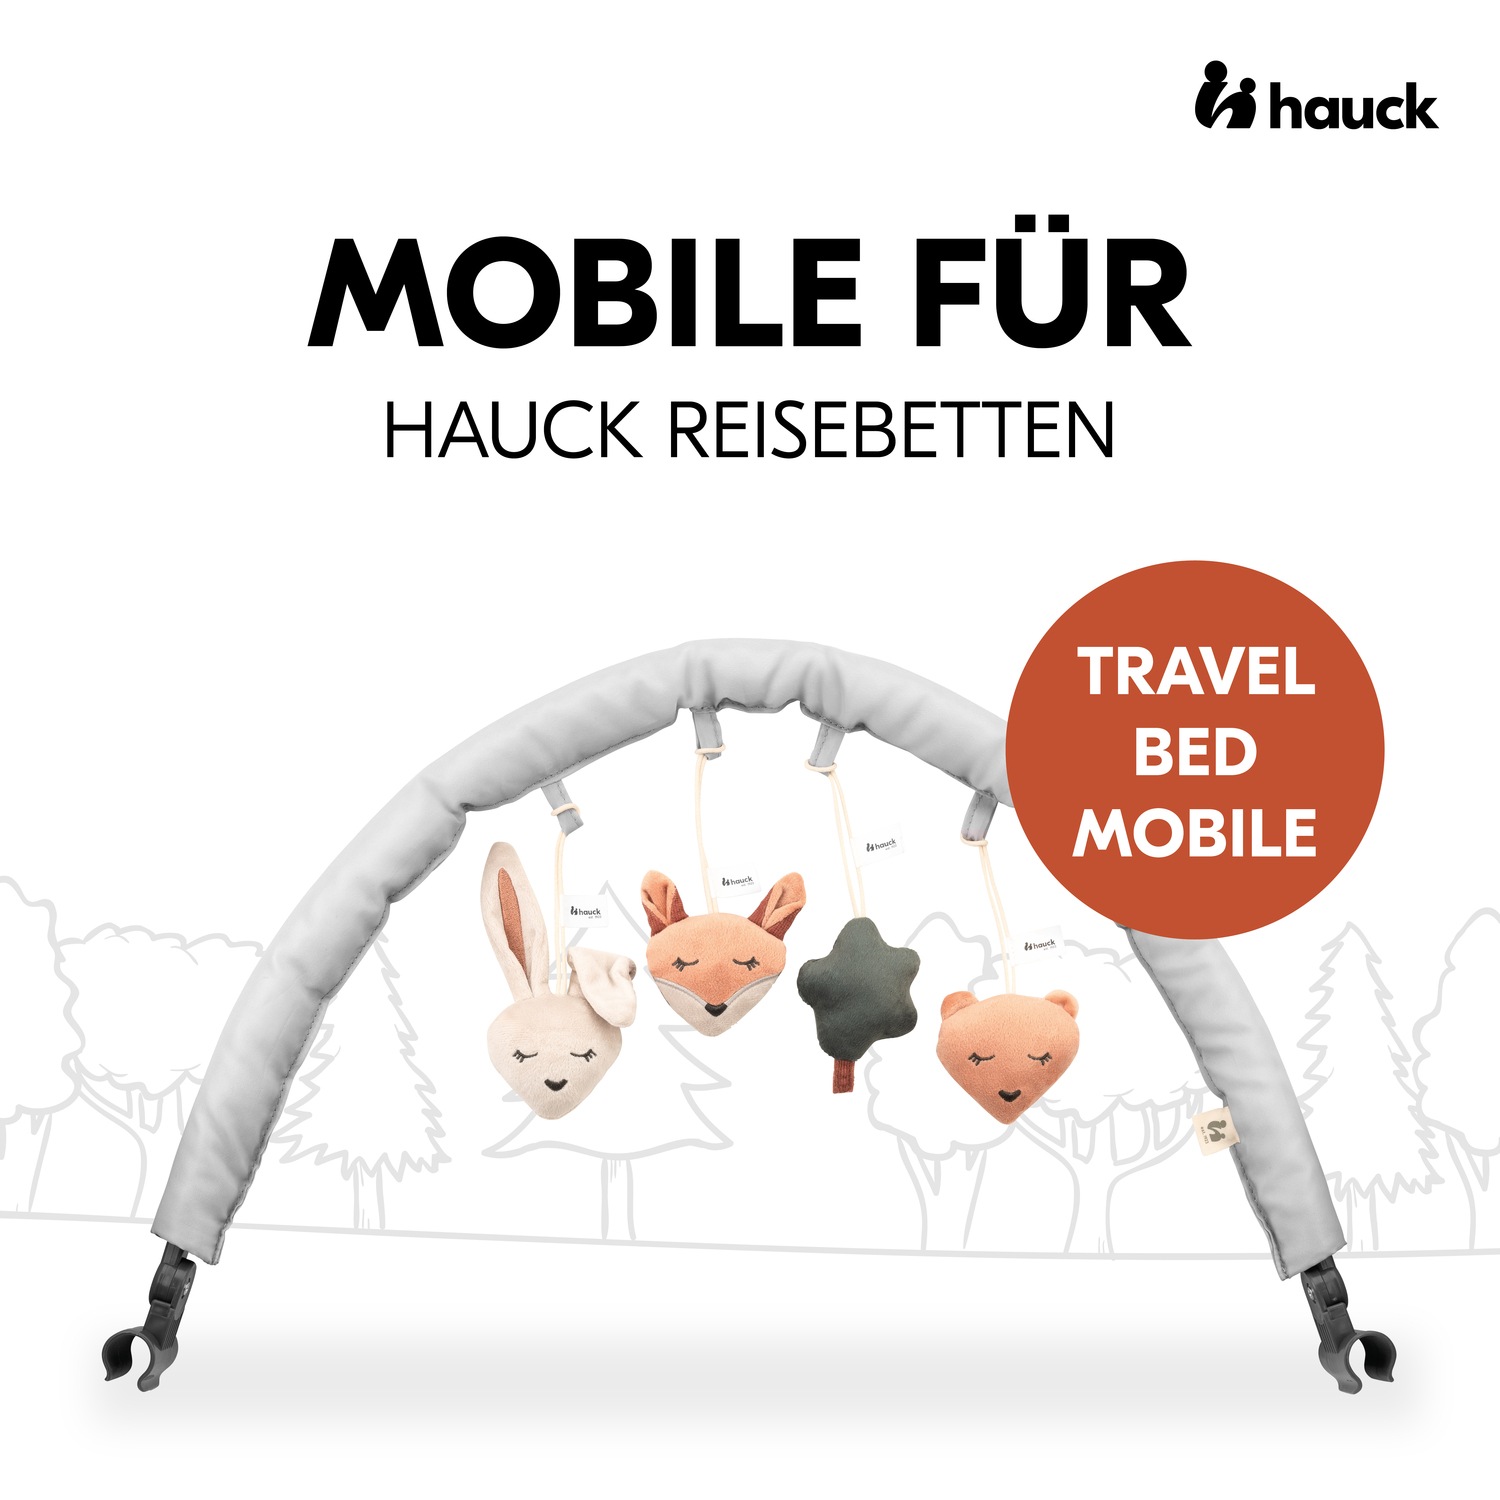 Hauck Mobile »Travel Bed Mobile, Forest«, für Hauck Reisebetten